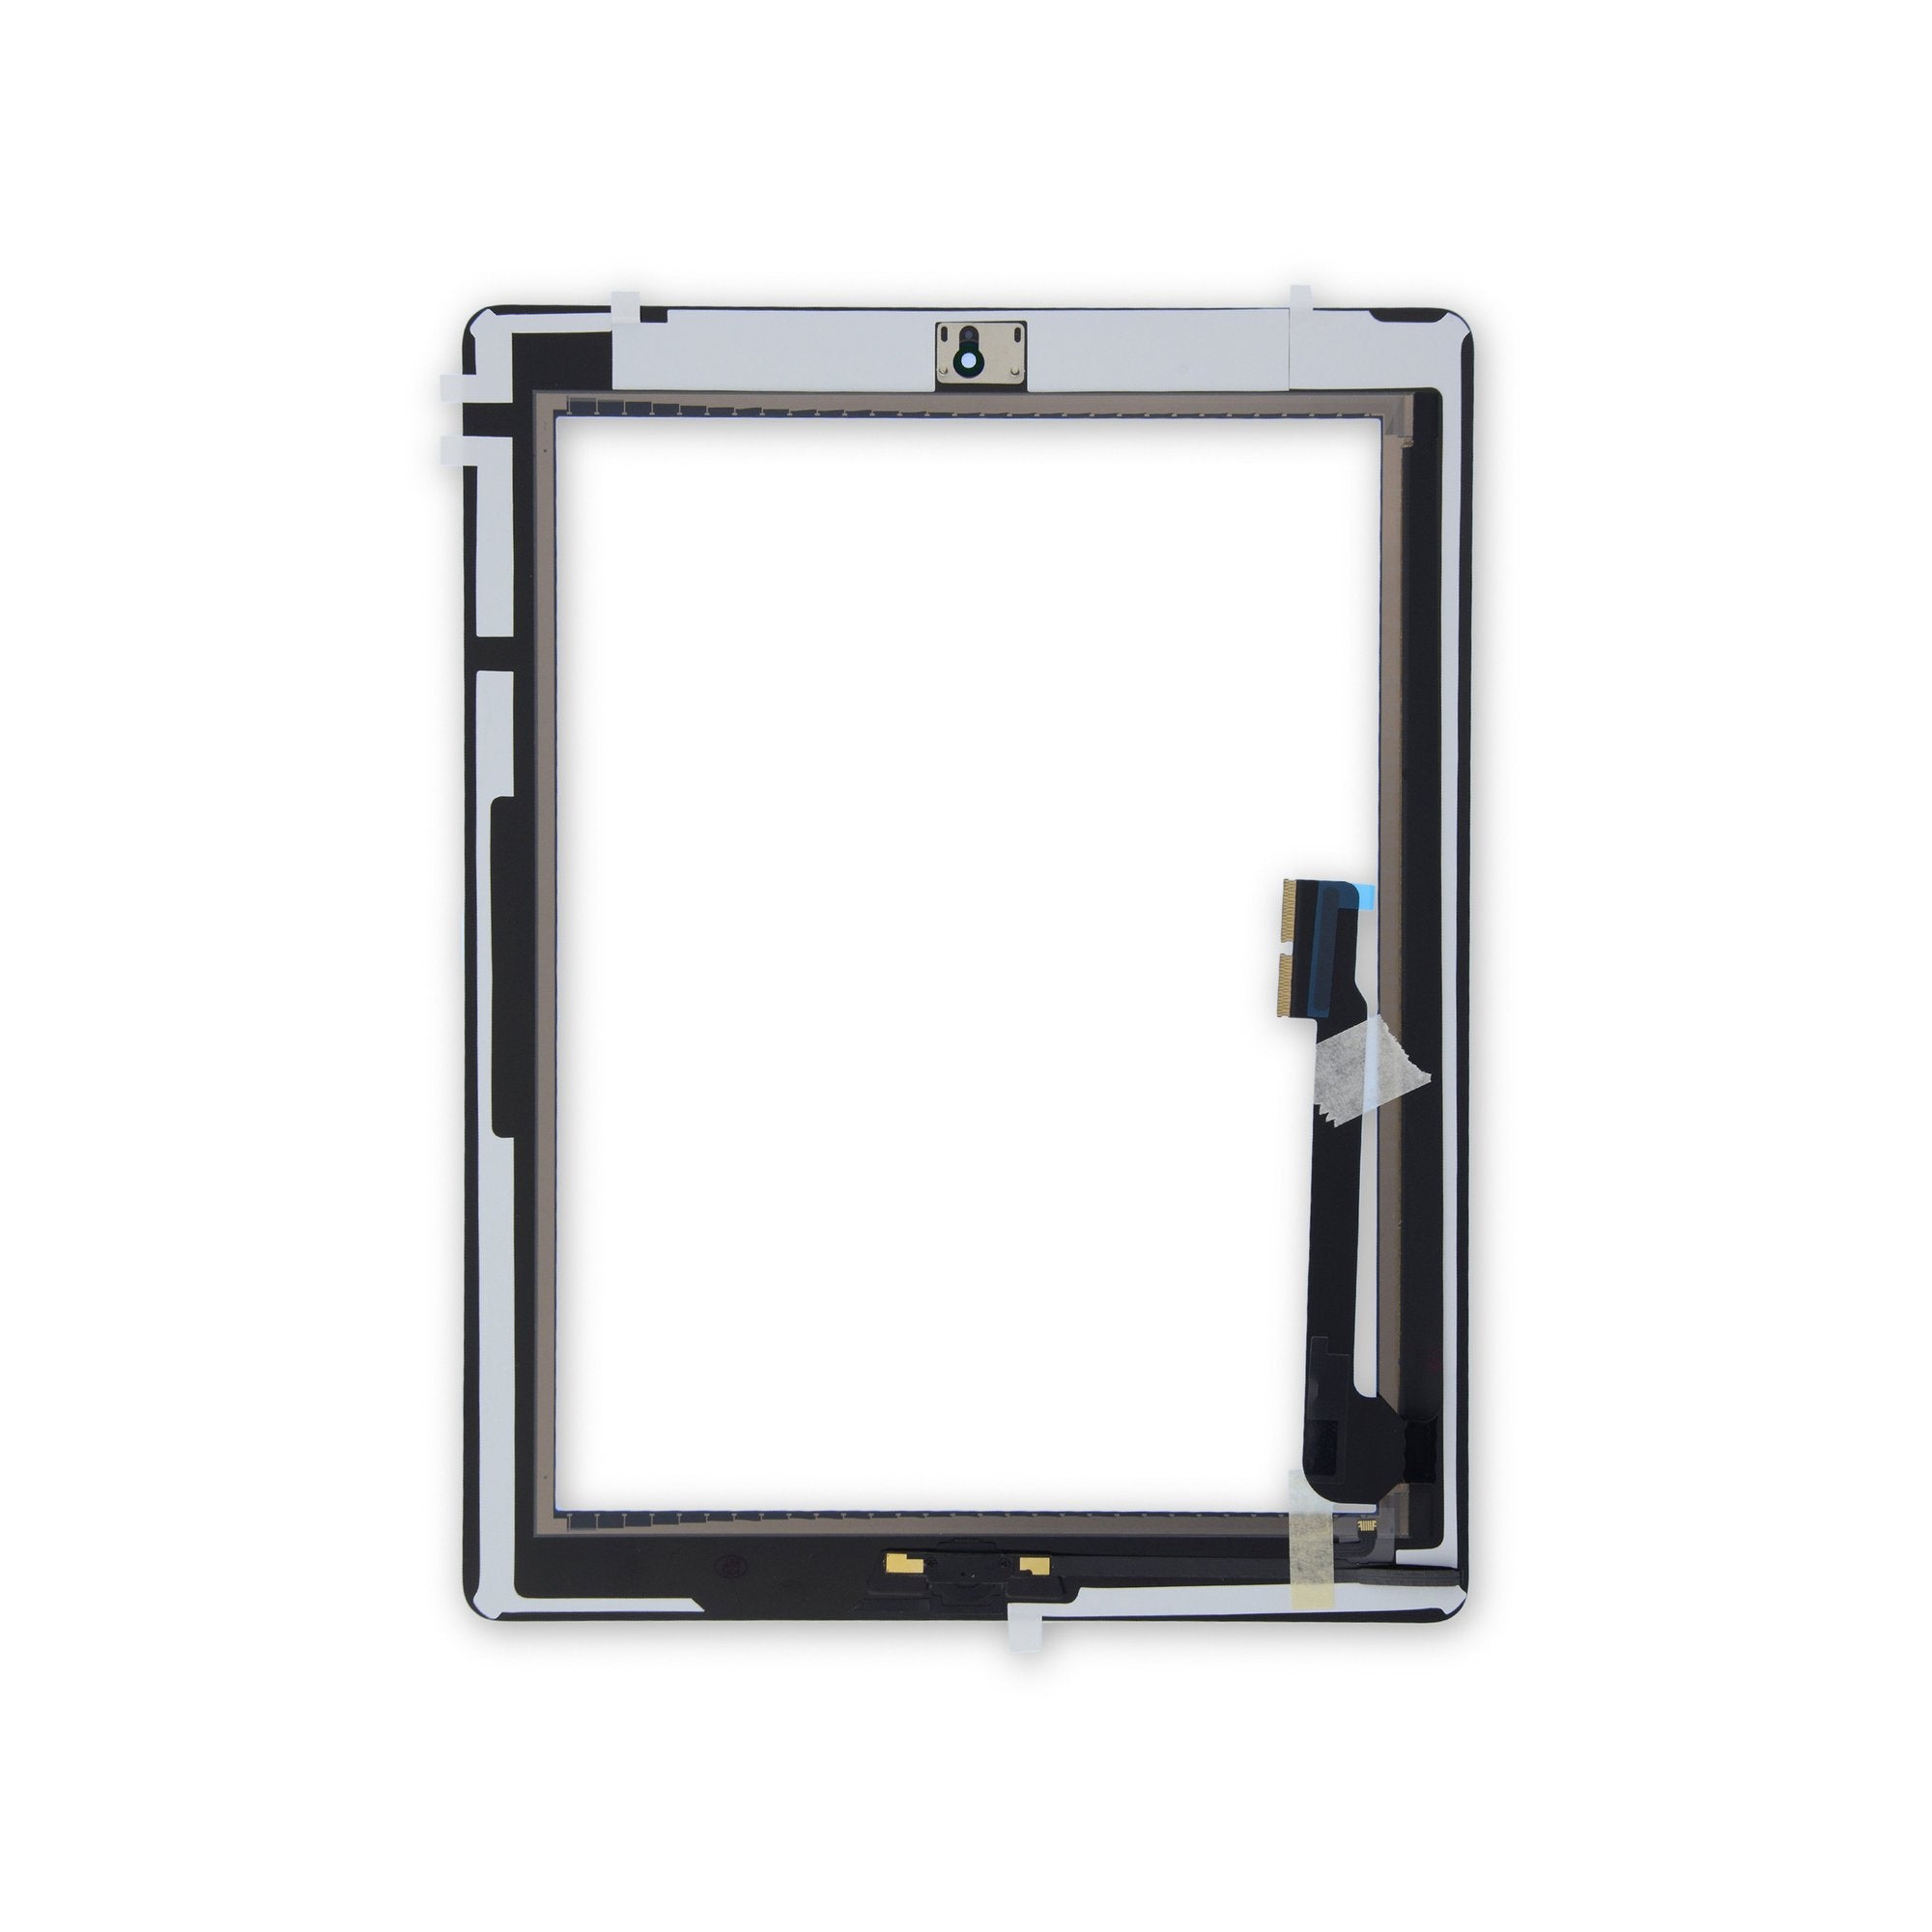 Abnehmbarer Gelenkarm für iPad Space - The Digital Store